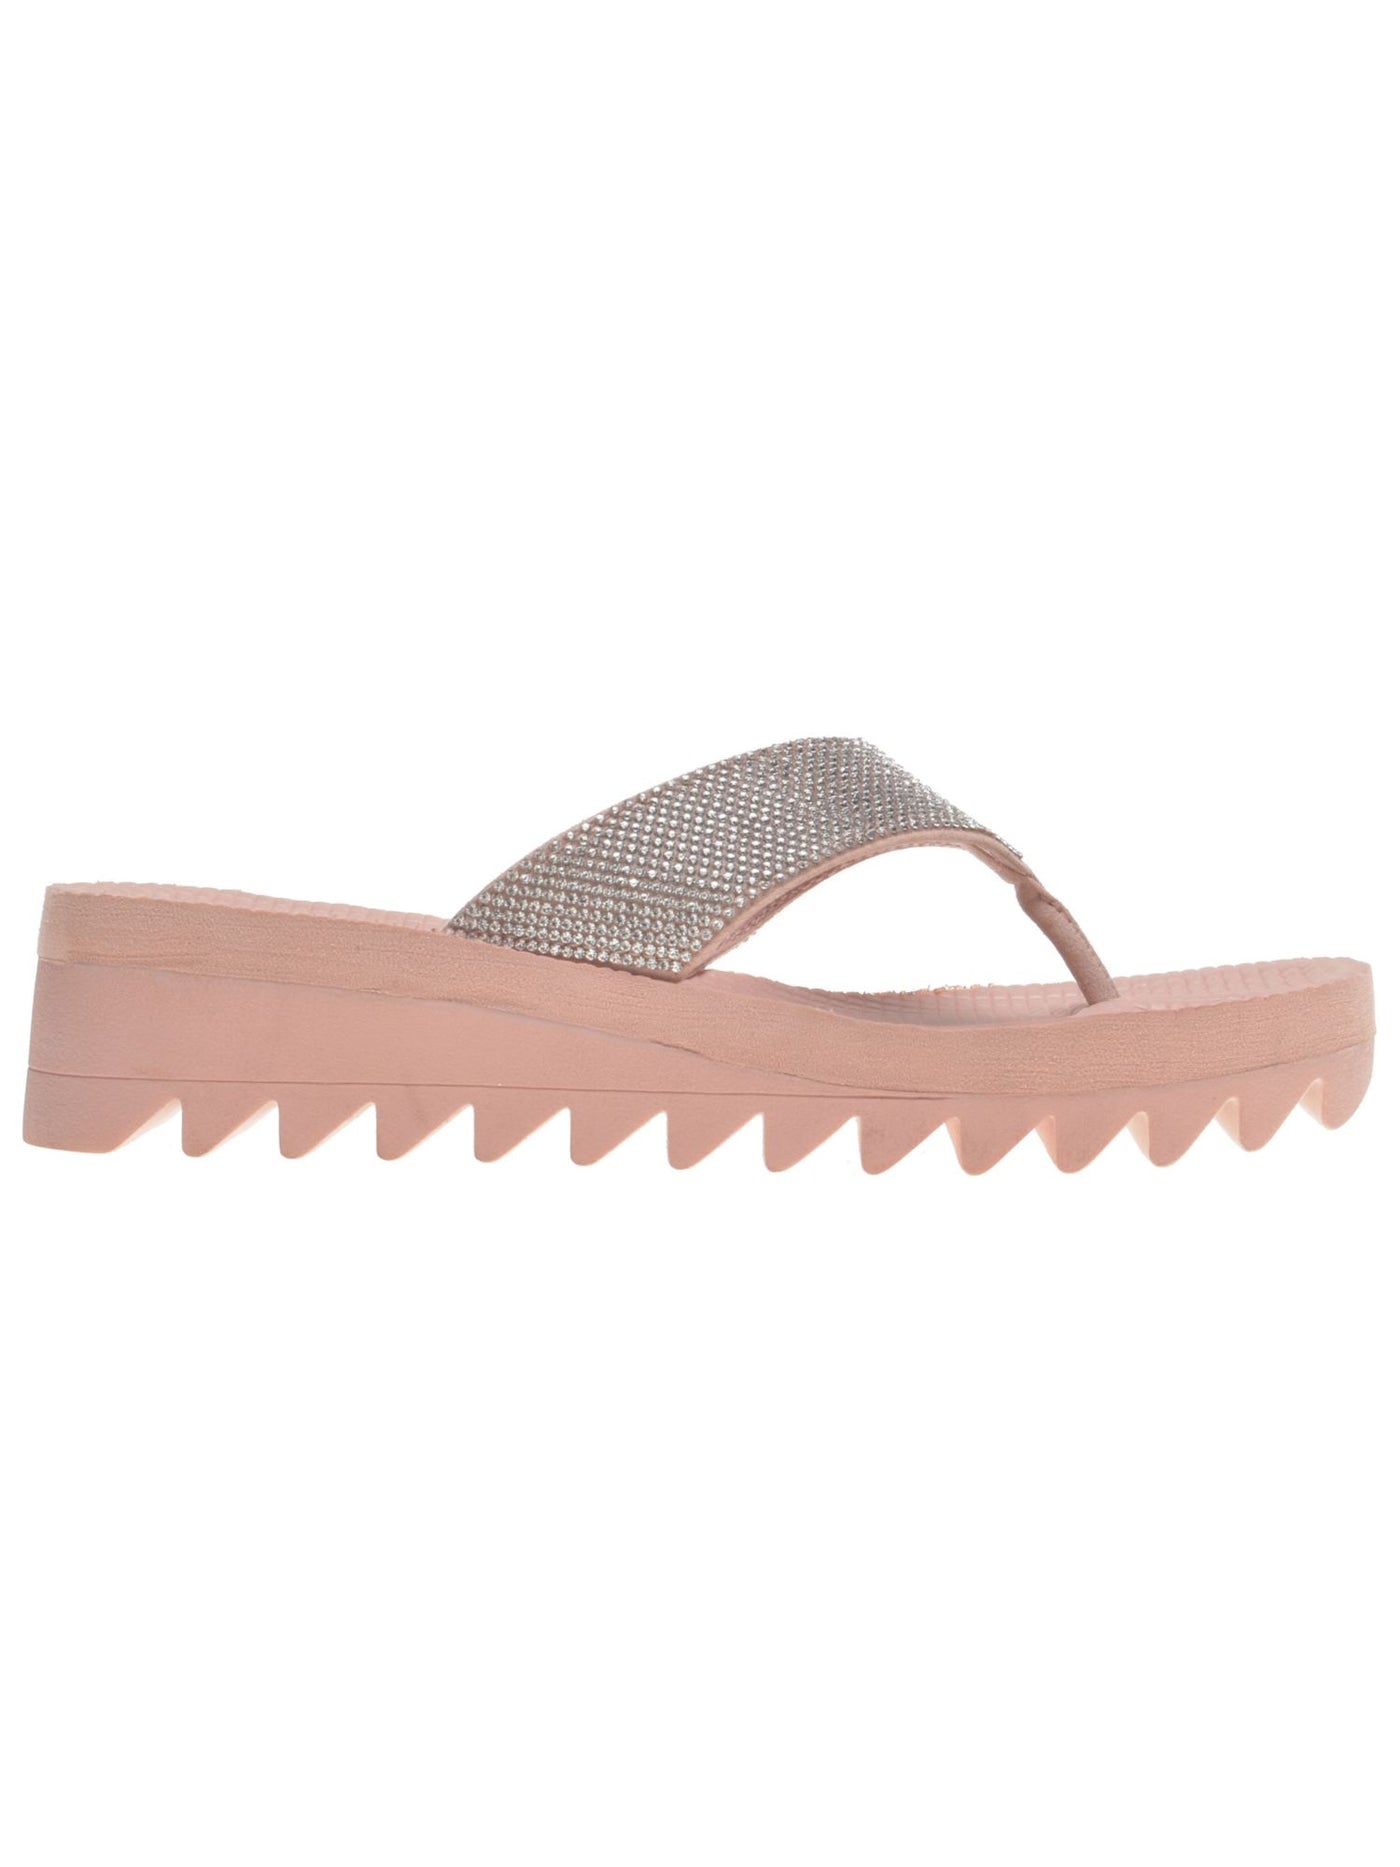 WILD PAIR Womens Pink Saw Tooth Sole Rhinestone Kalabasas Round Toe Wedge Slip On Thong Sandals Shoes 8 M